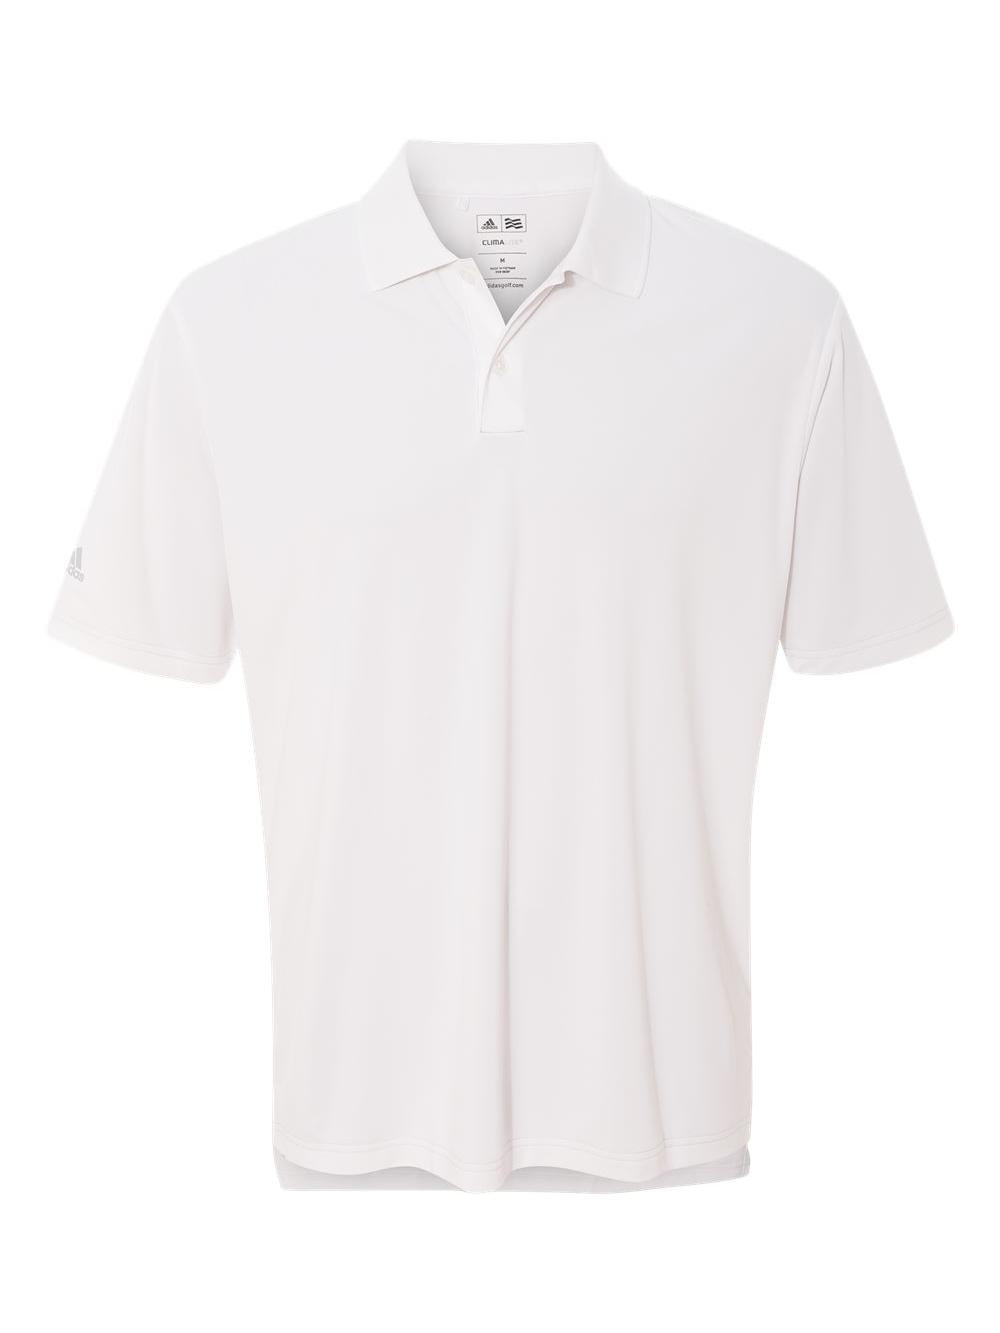 Adidas Sport Shirts Climalite Contrast Stitch Sport Shirt - Walmart.com